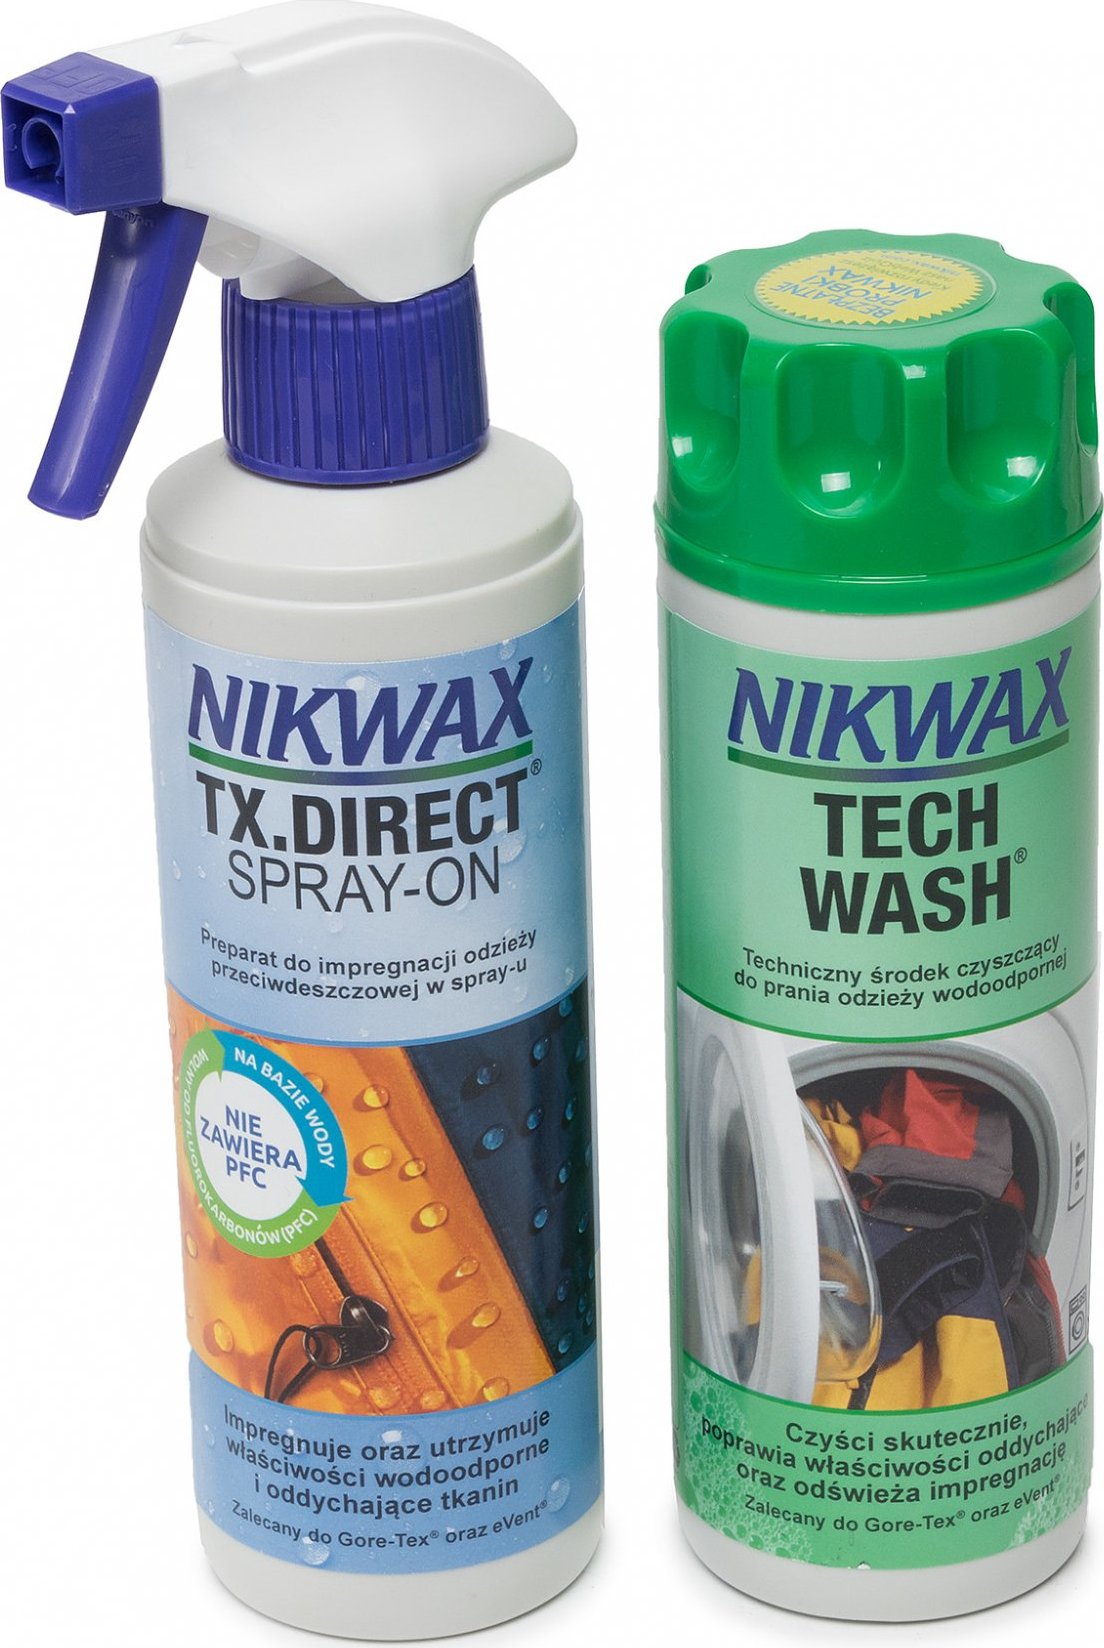 Sady Nikwax Tx.Direct/Tech Wash